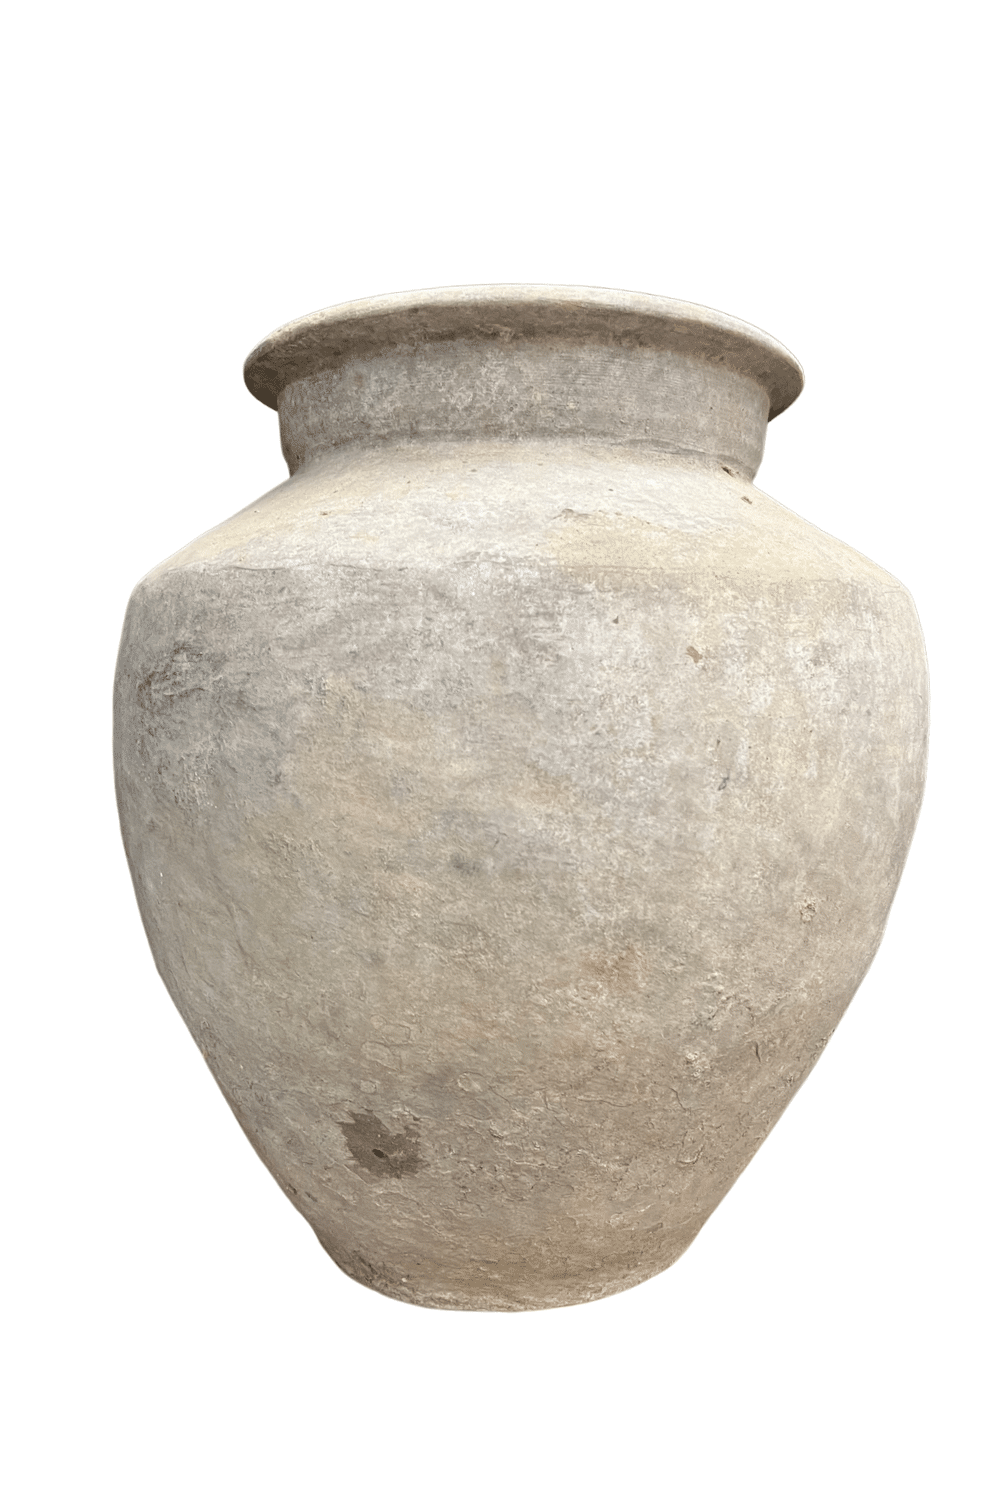 oude kruik landelijk getoond vaas oude pot